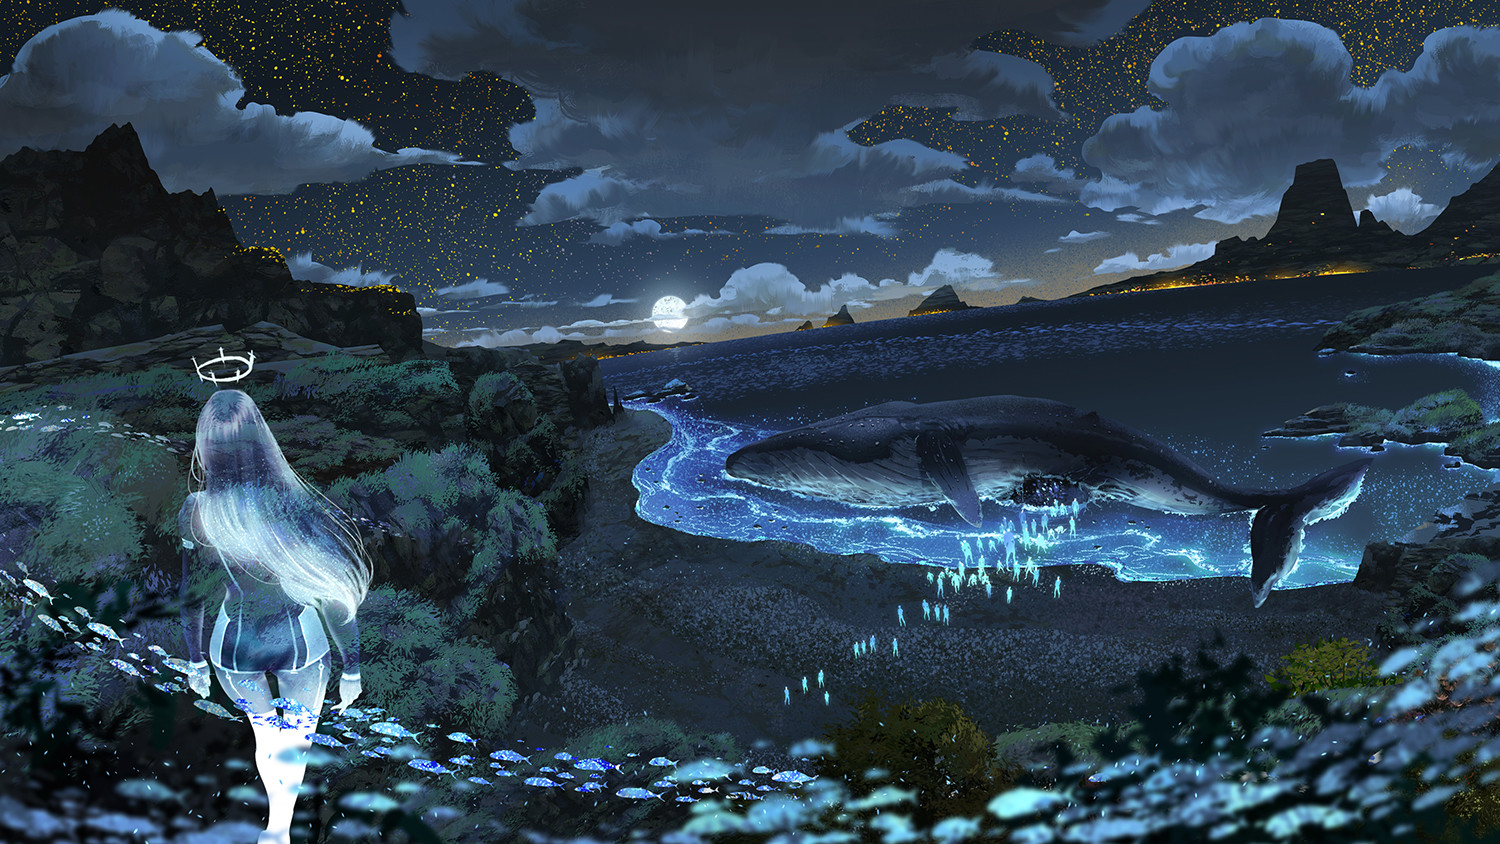 Watermother Jian Digital Art Fantasy Art Whale Beach Starry Night Fish Surreal Night Moon Moonlight  1500x844